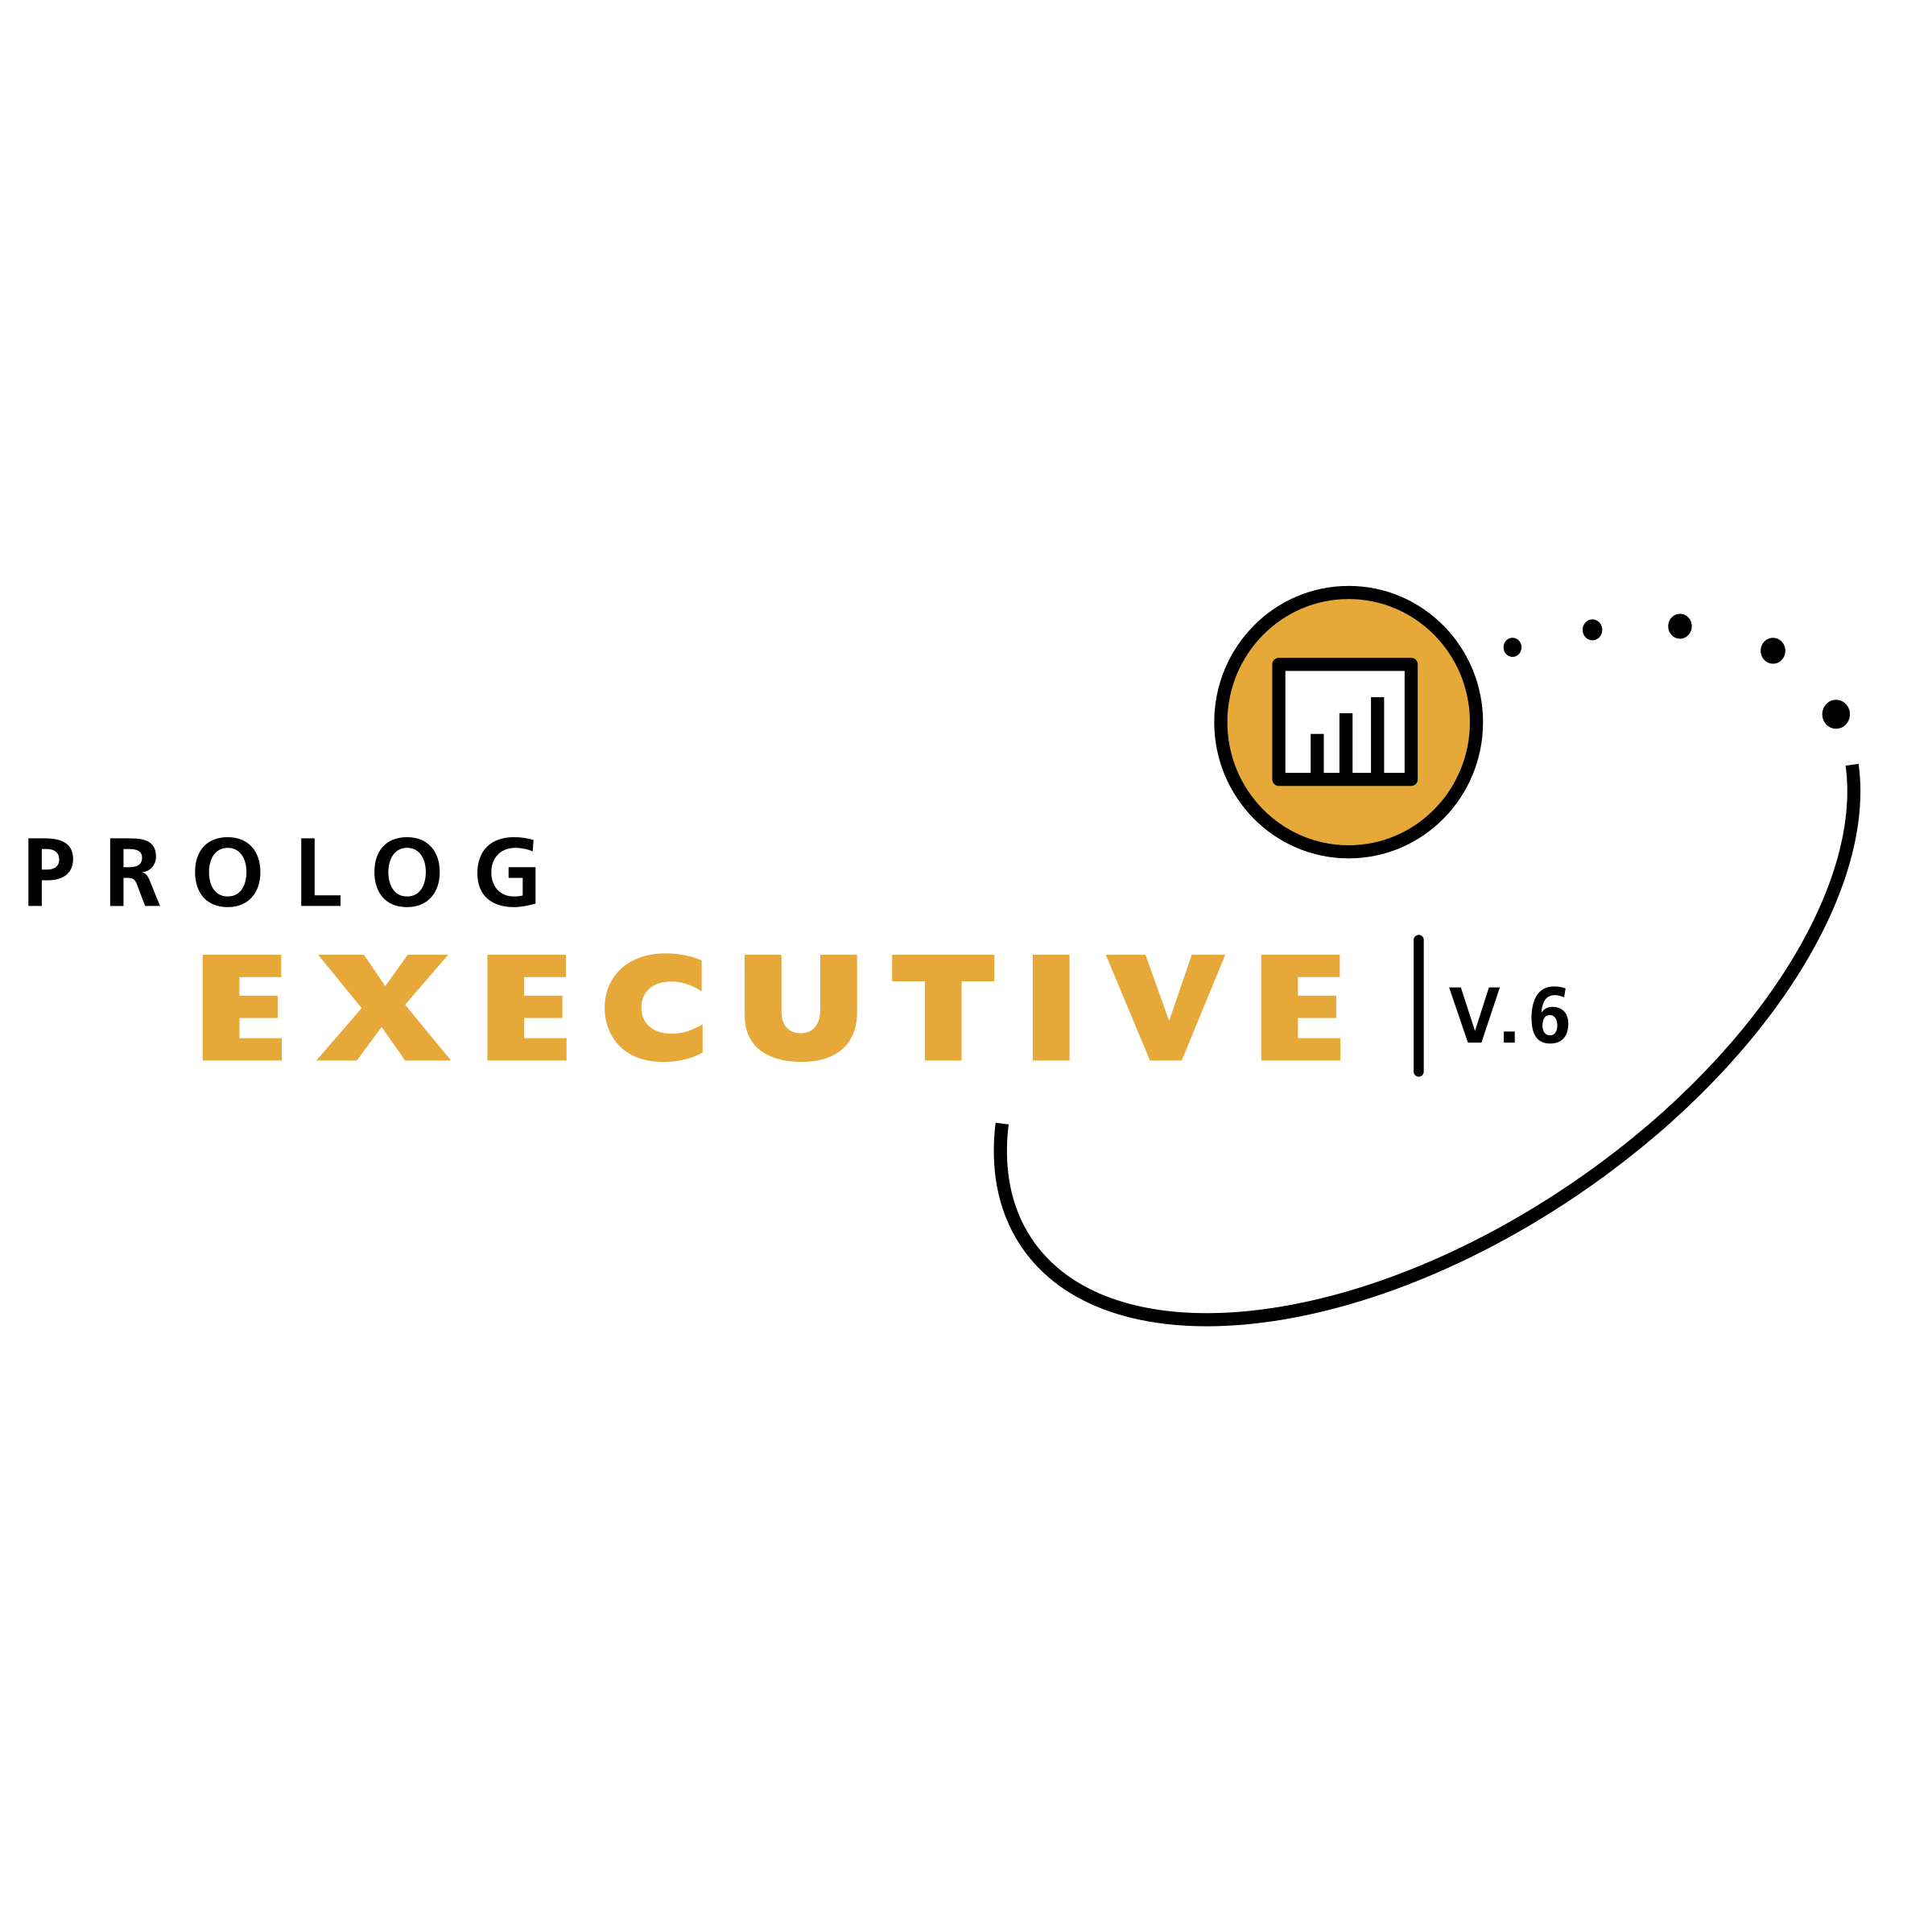 Prolog Logo - Prolog Executive Logo PNG Transparent & SVG Vector - Freebie Supply